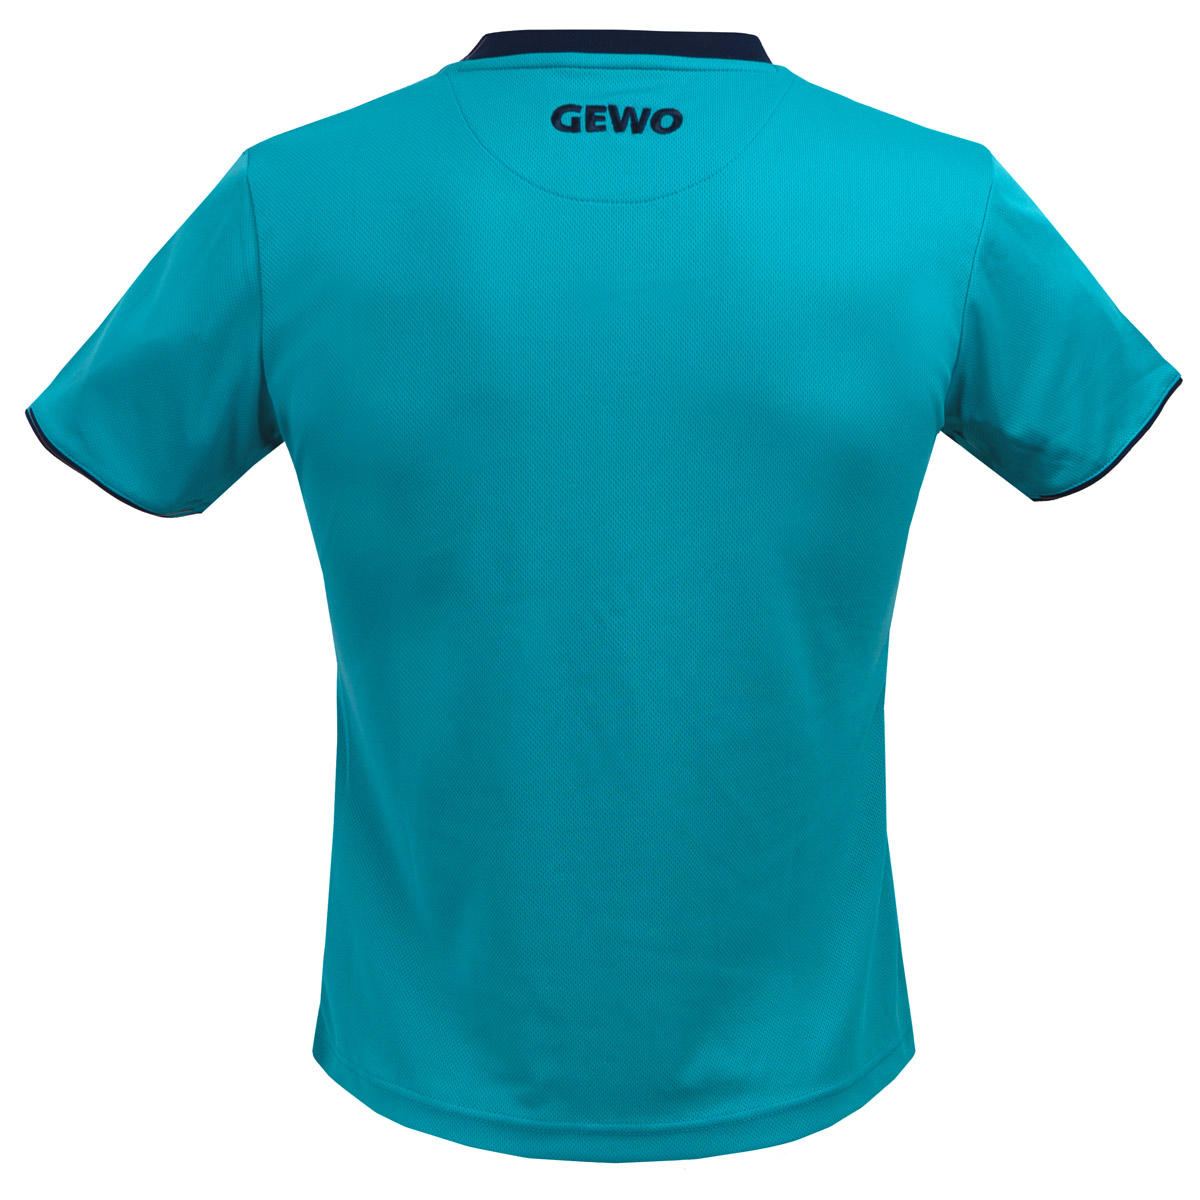 GEWO Shirt Sawona Lady turquoise/blue XXS